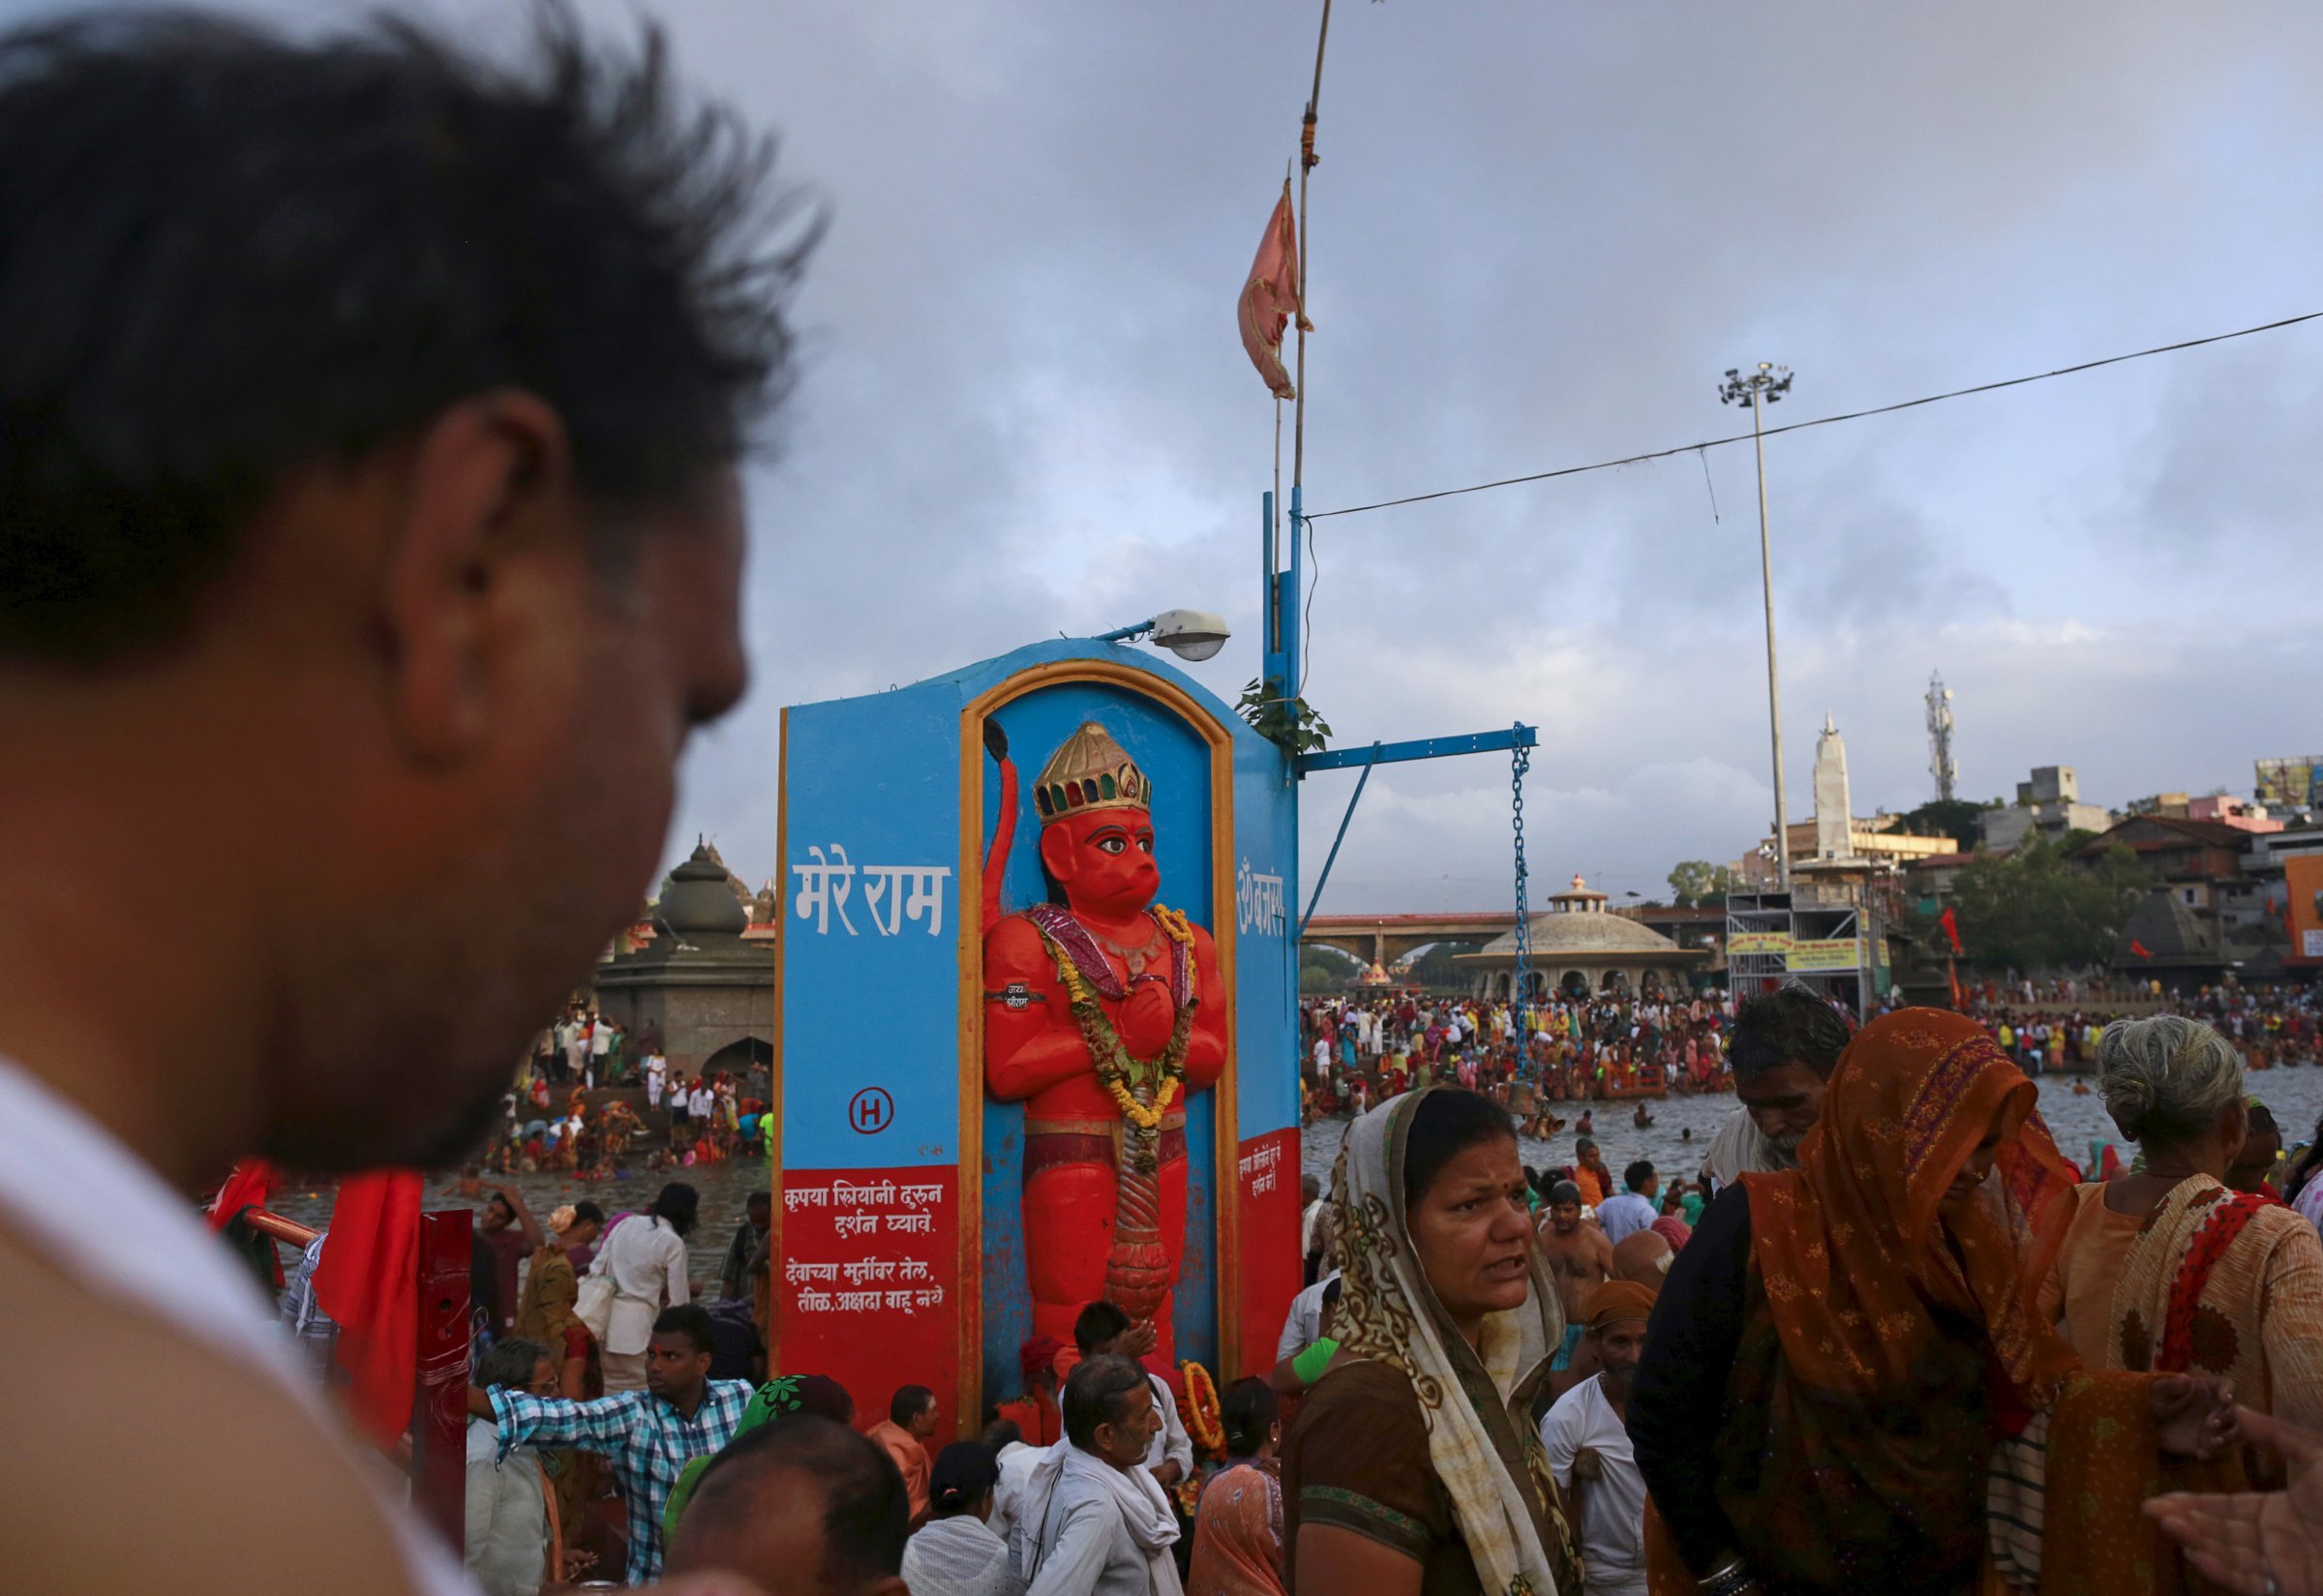 Devotees walk past an Hanuman idol on the banks of Godavari river during "Kumbh Mela" or the Pitcher Festival in Nashik